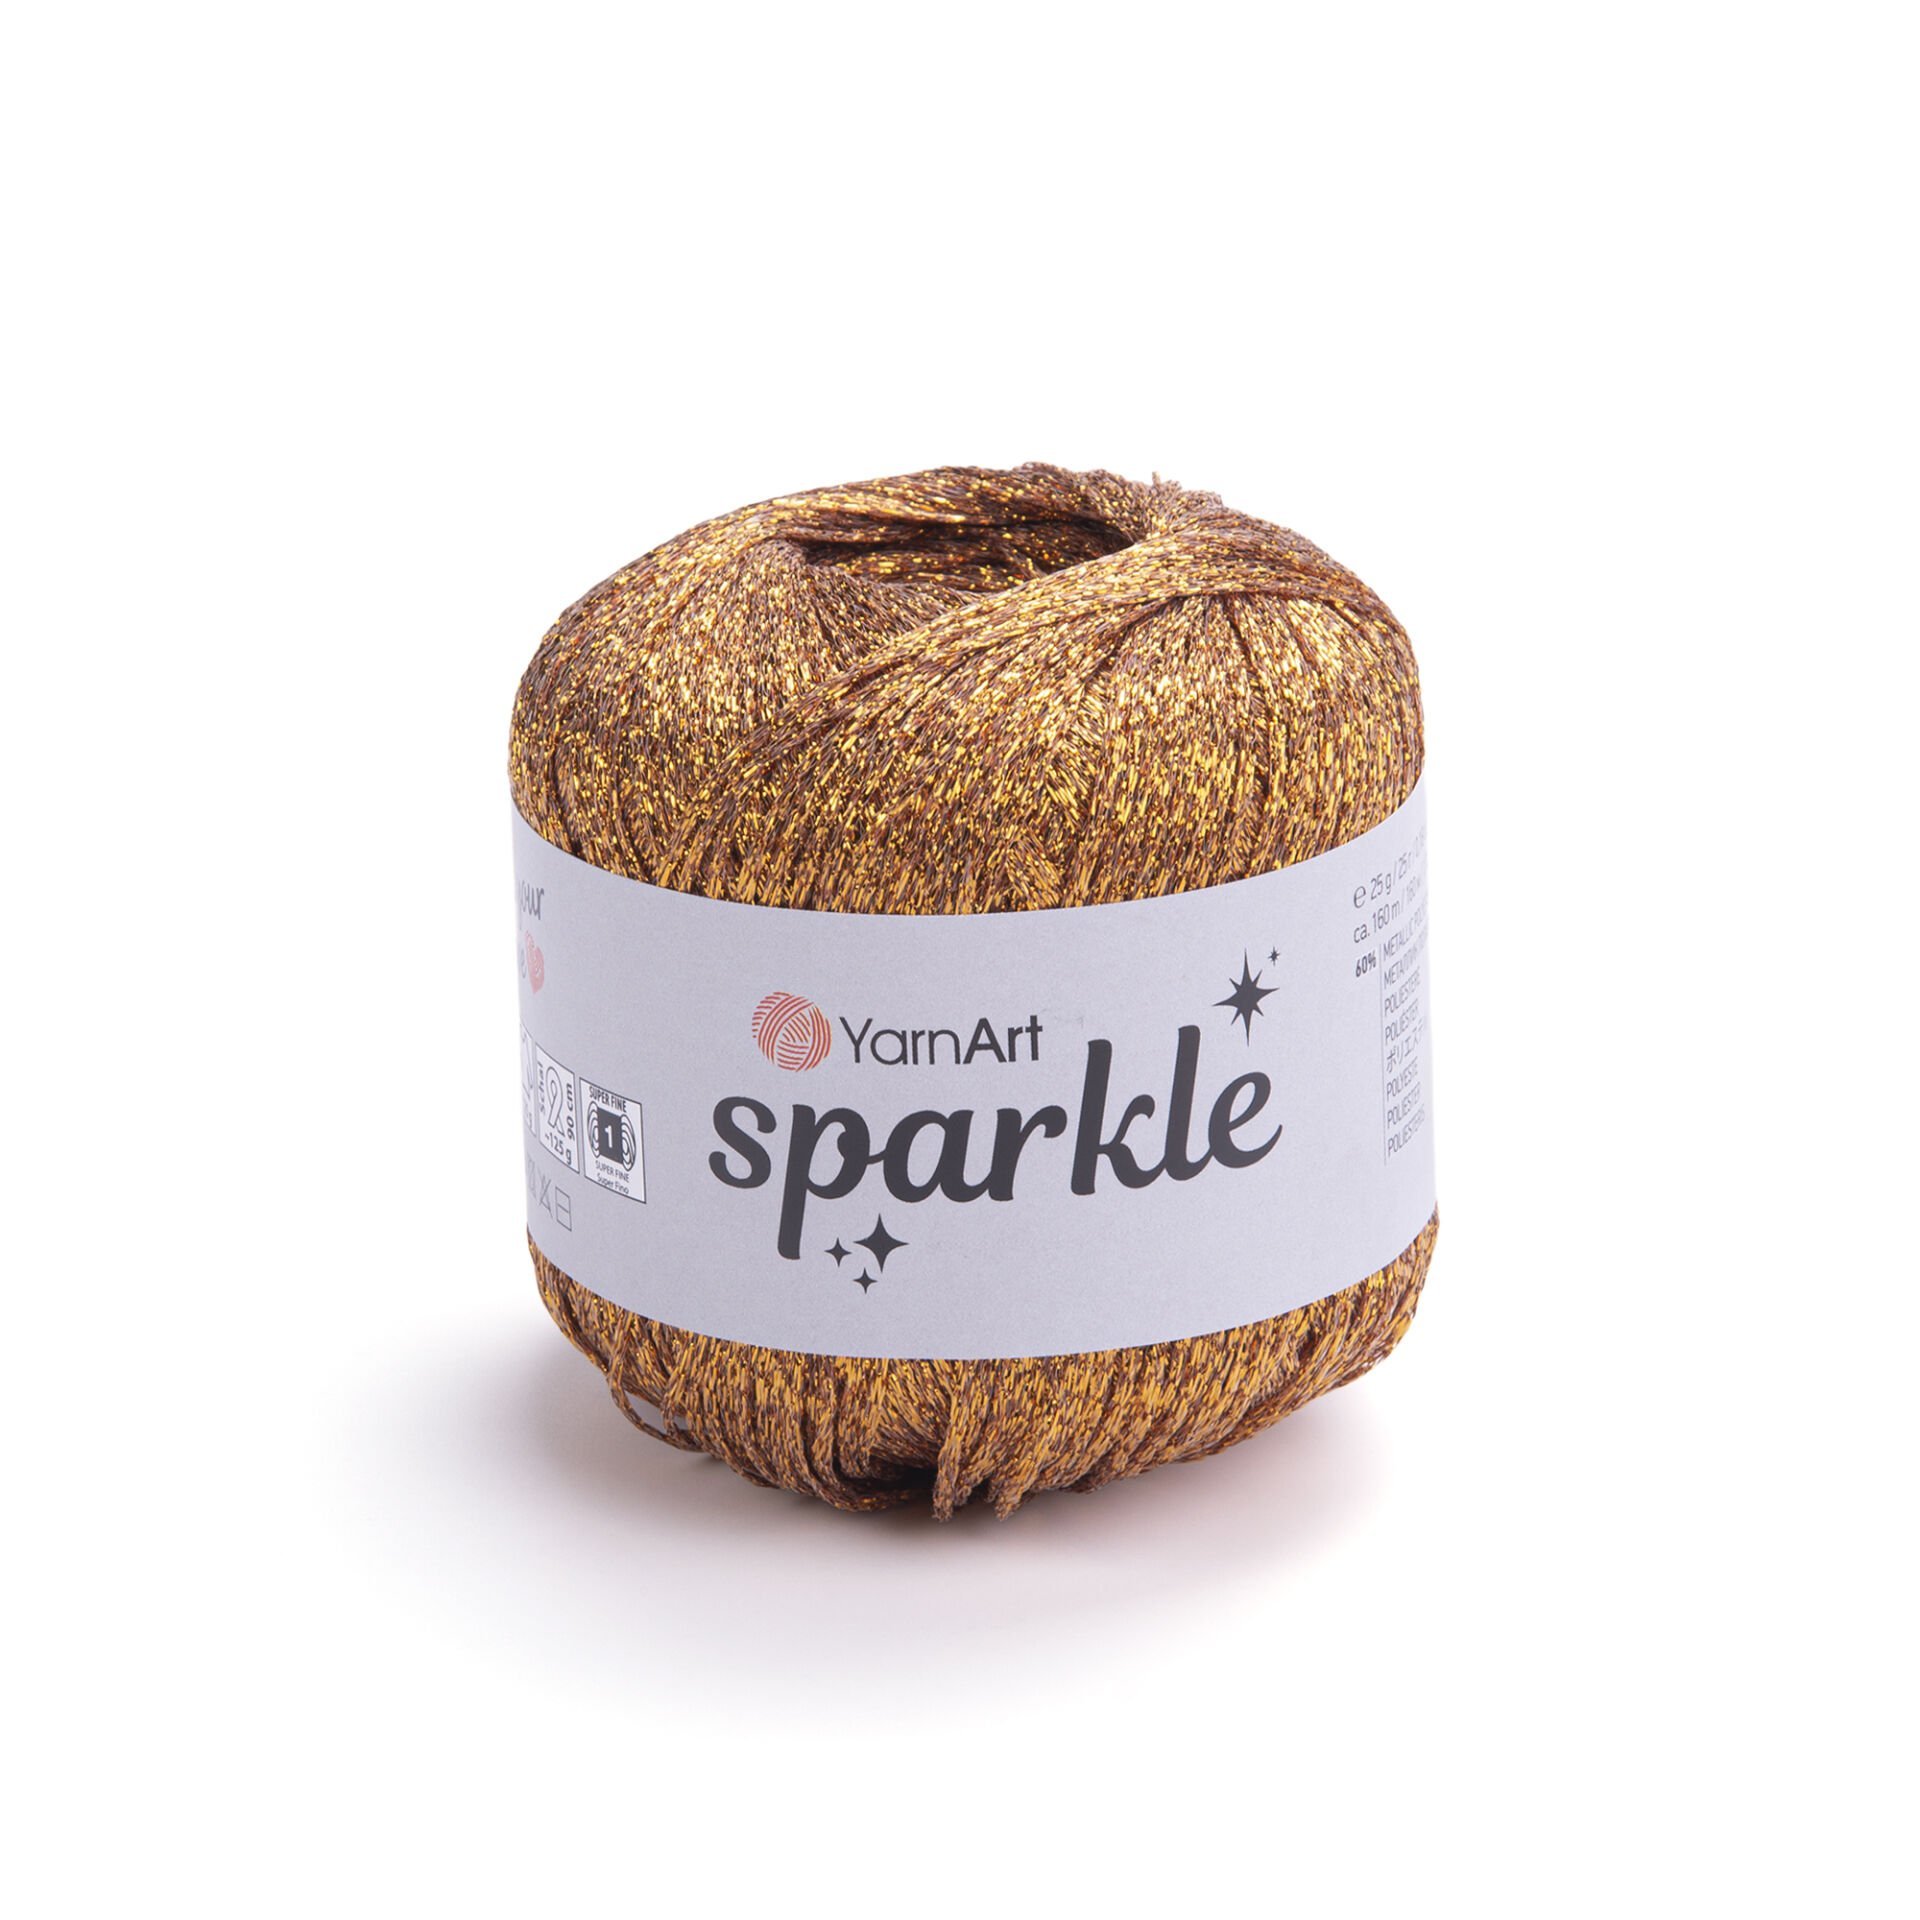 Metallic Yarn, Sparkle & Gold Yarn